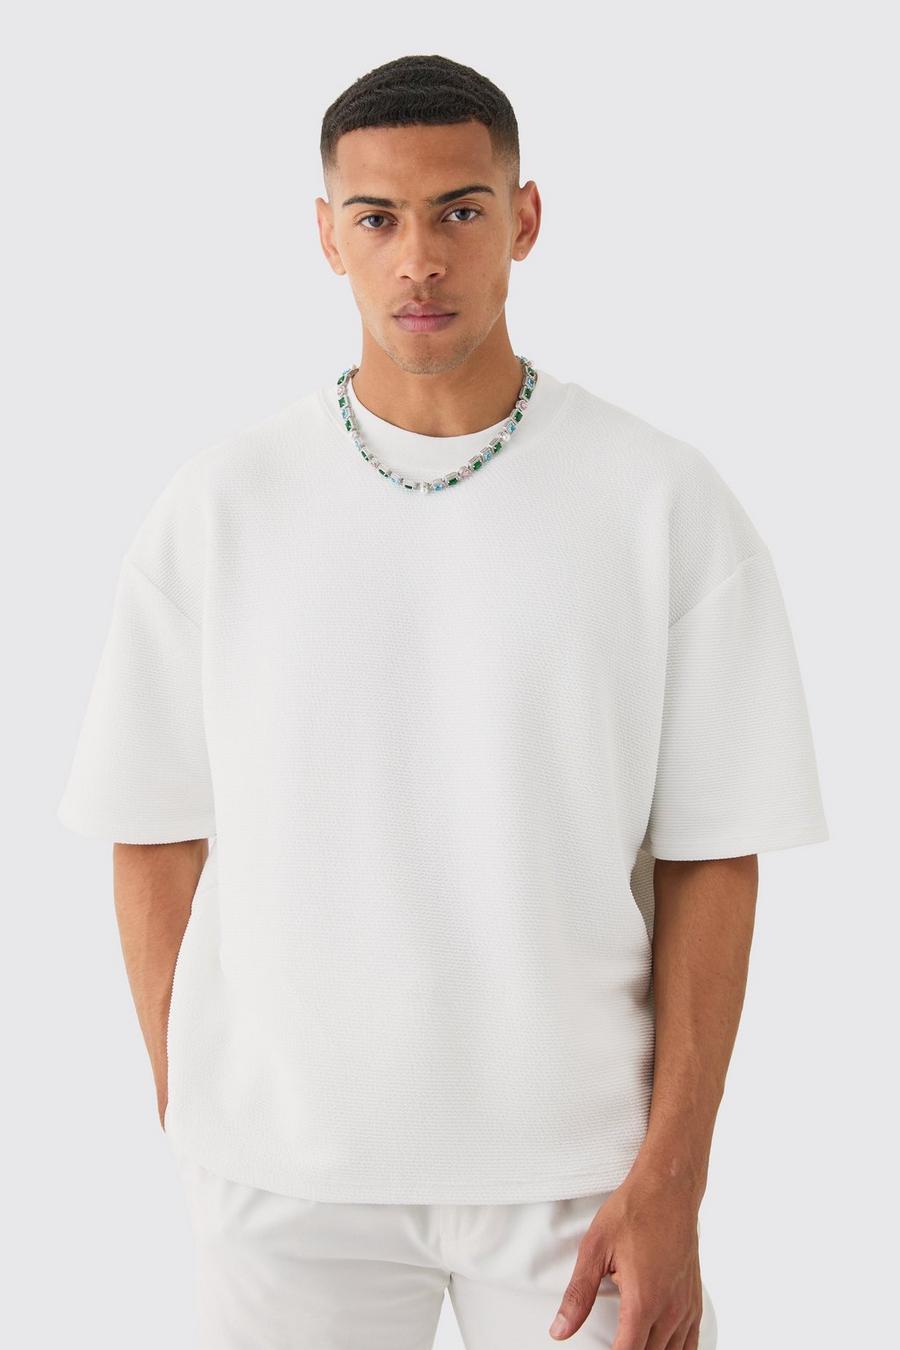 Kastiges strukturiertes Oversize T-Shirt, White